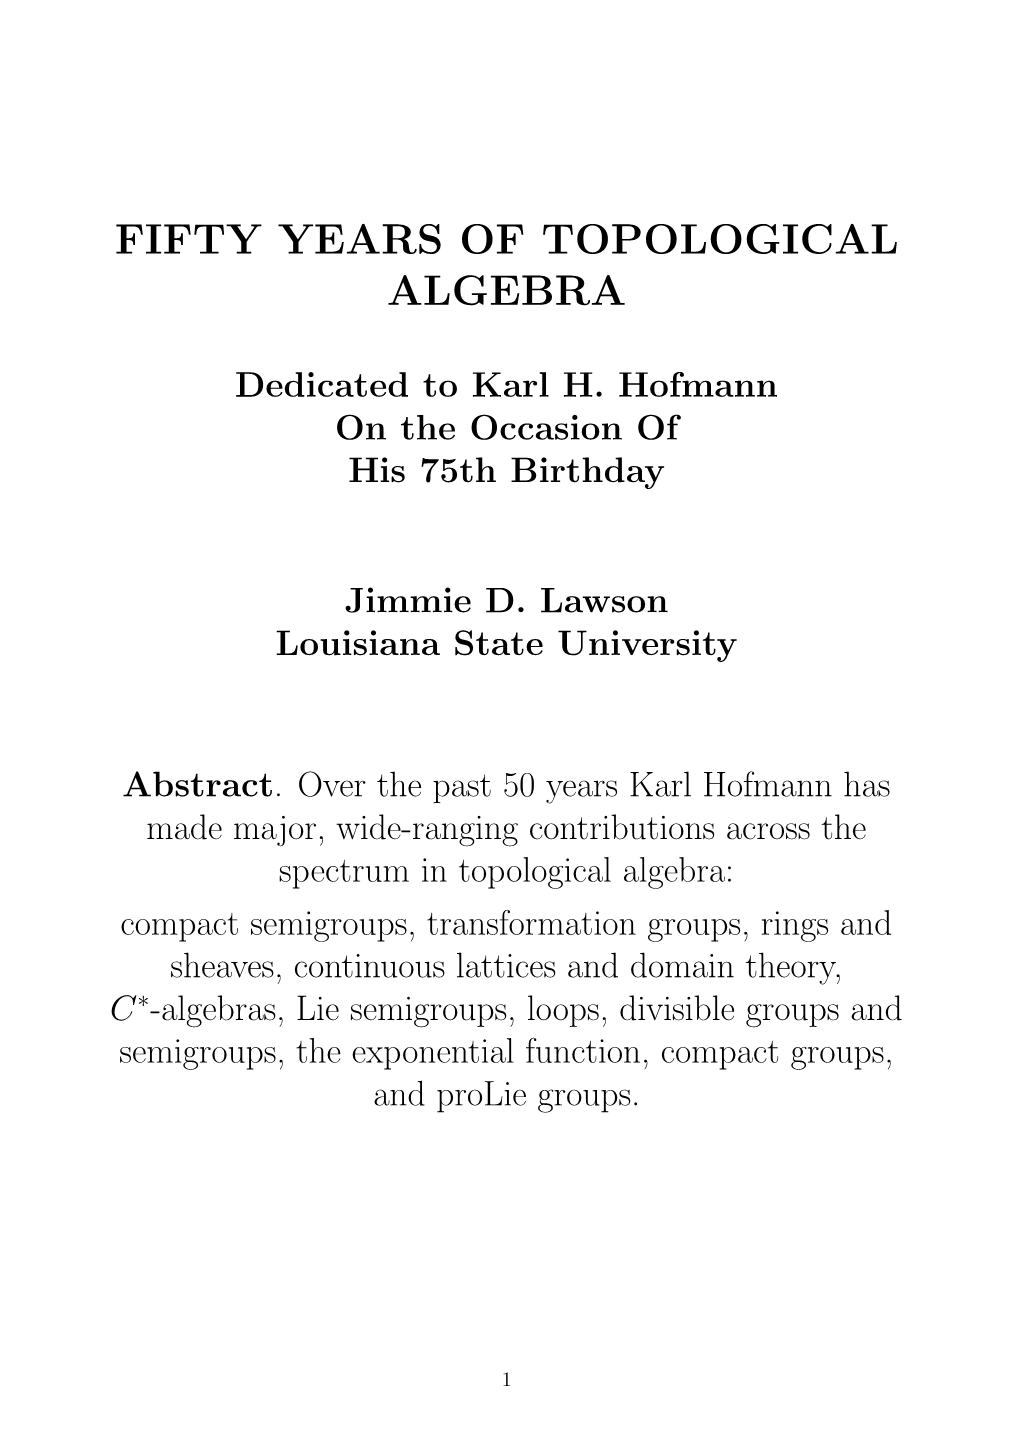 Fifty Years of Topological Algebra